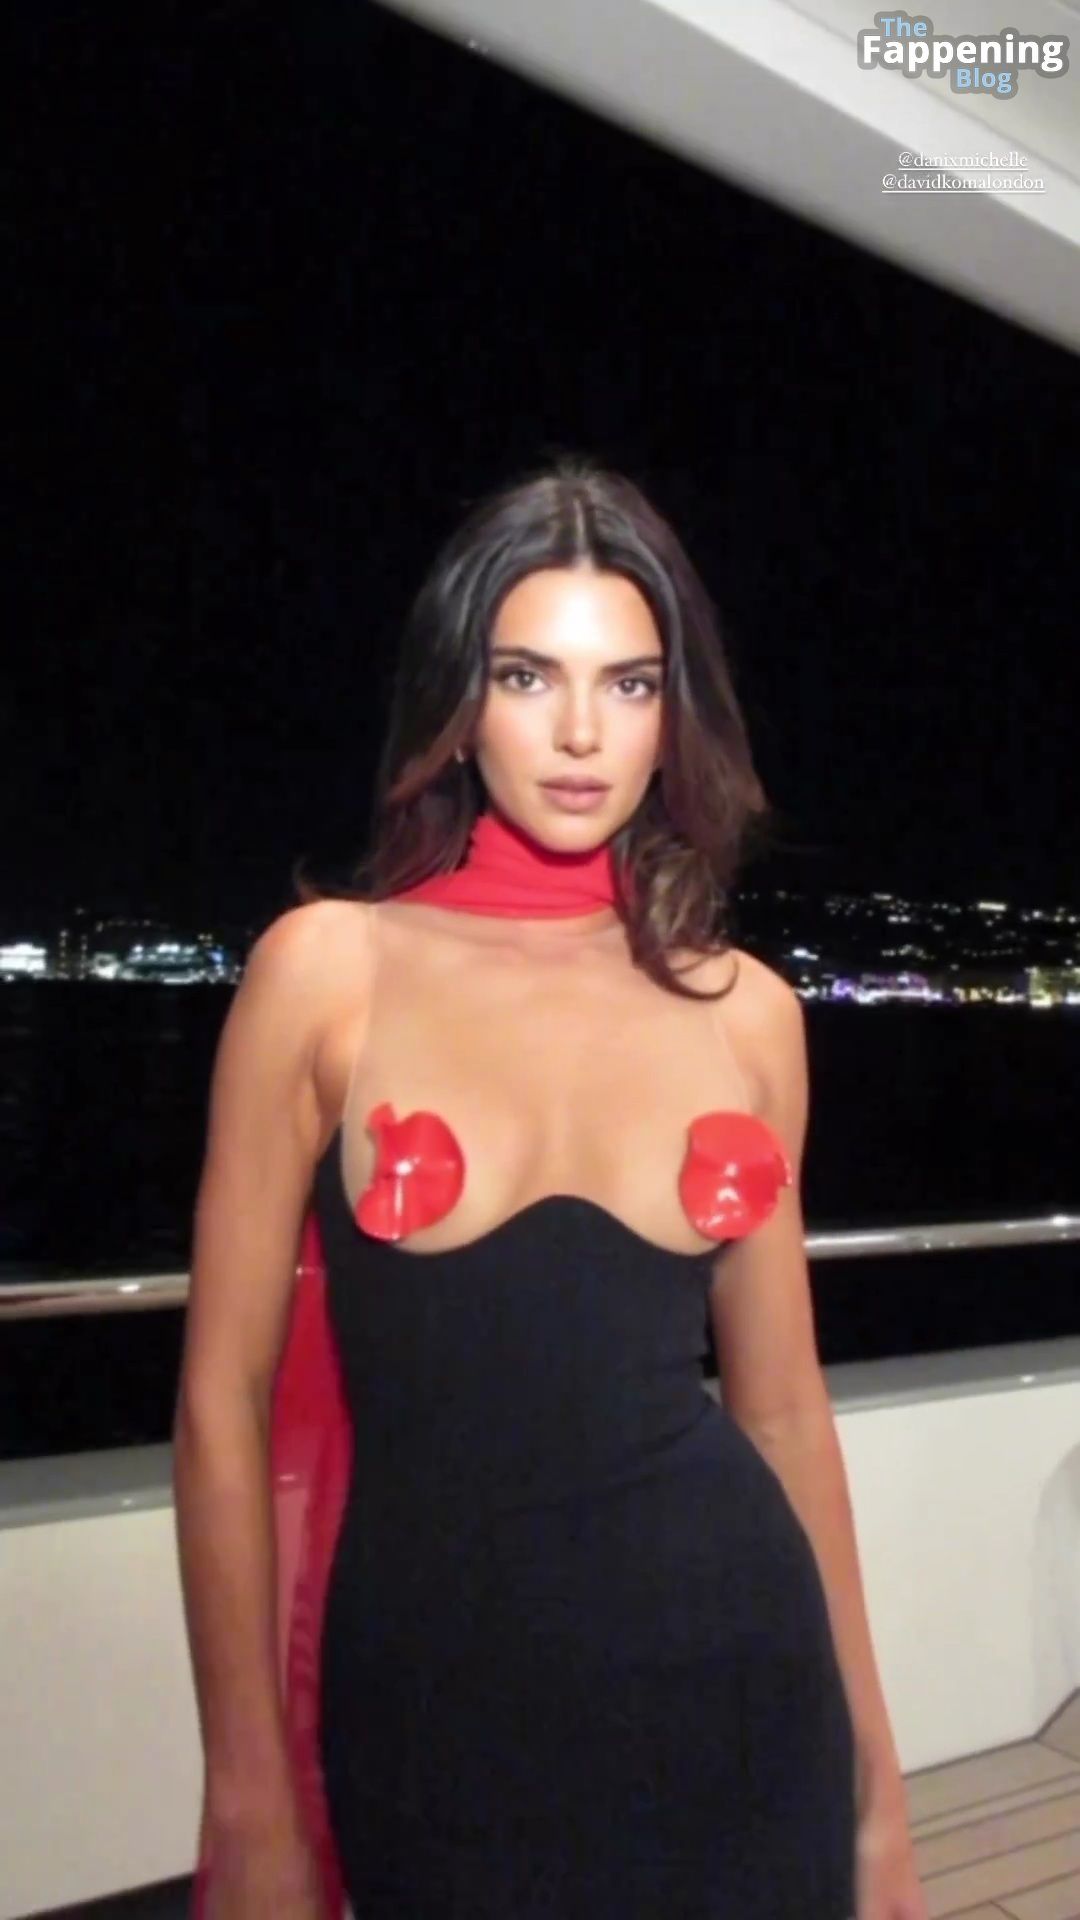 Kendall-Jenner-Topless-The-Fappening-Blog-9.jpg